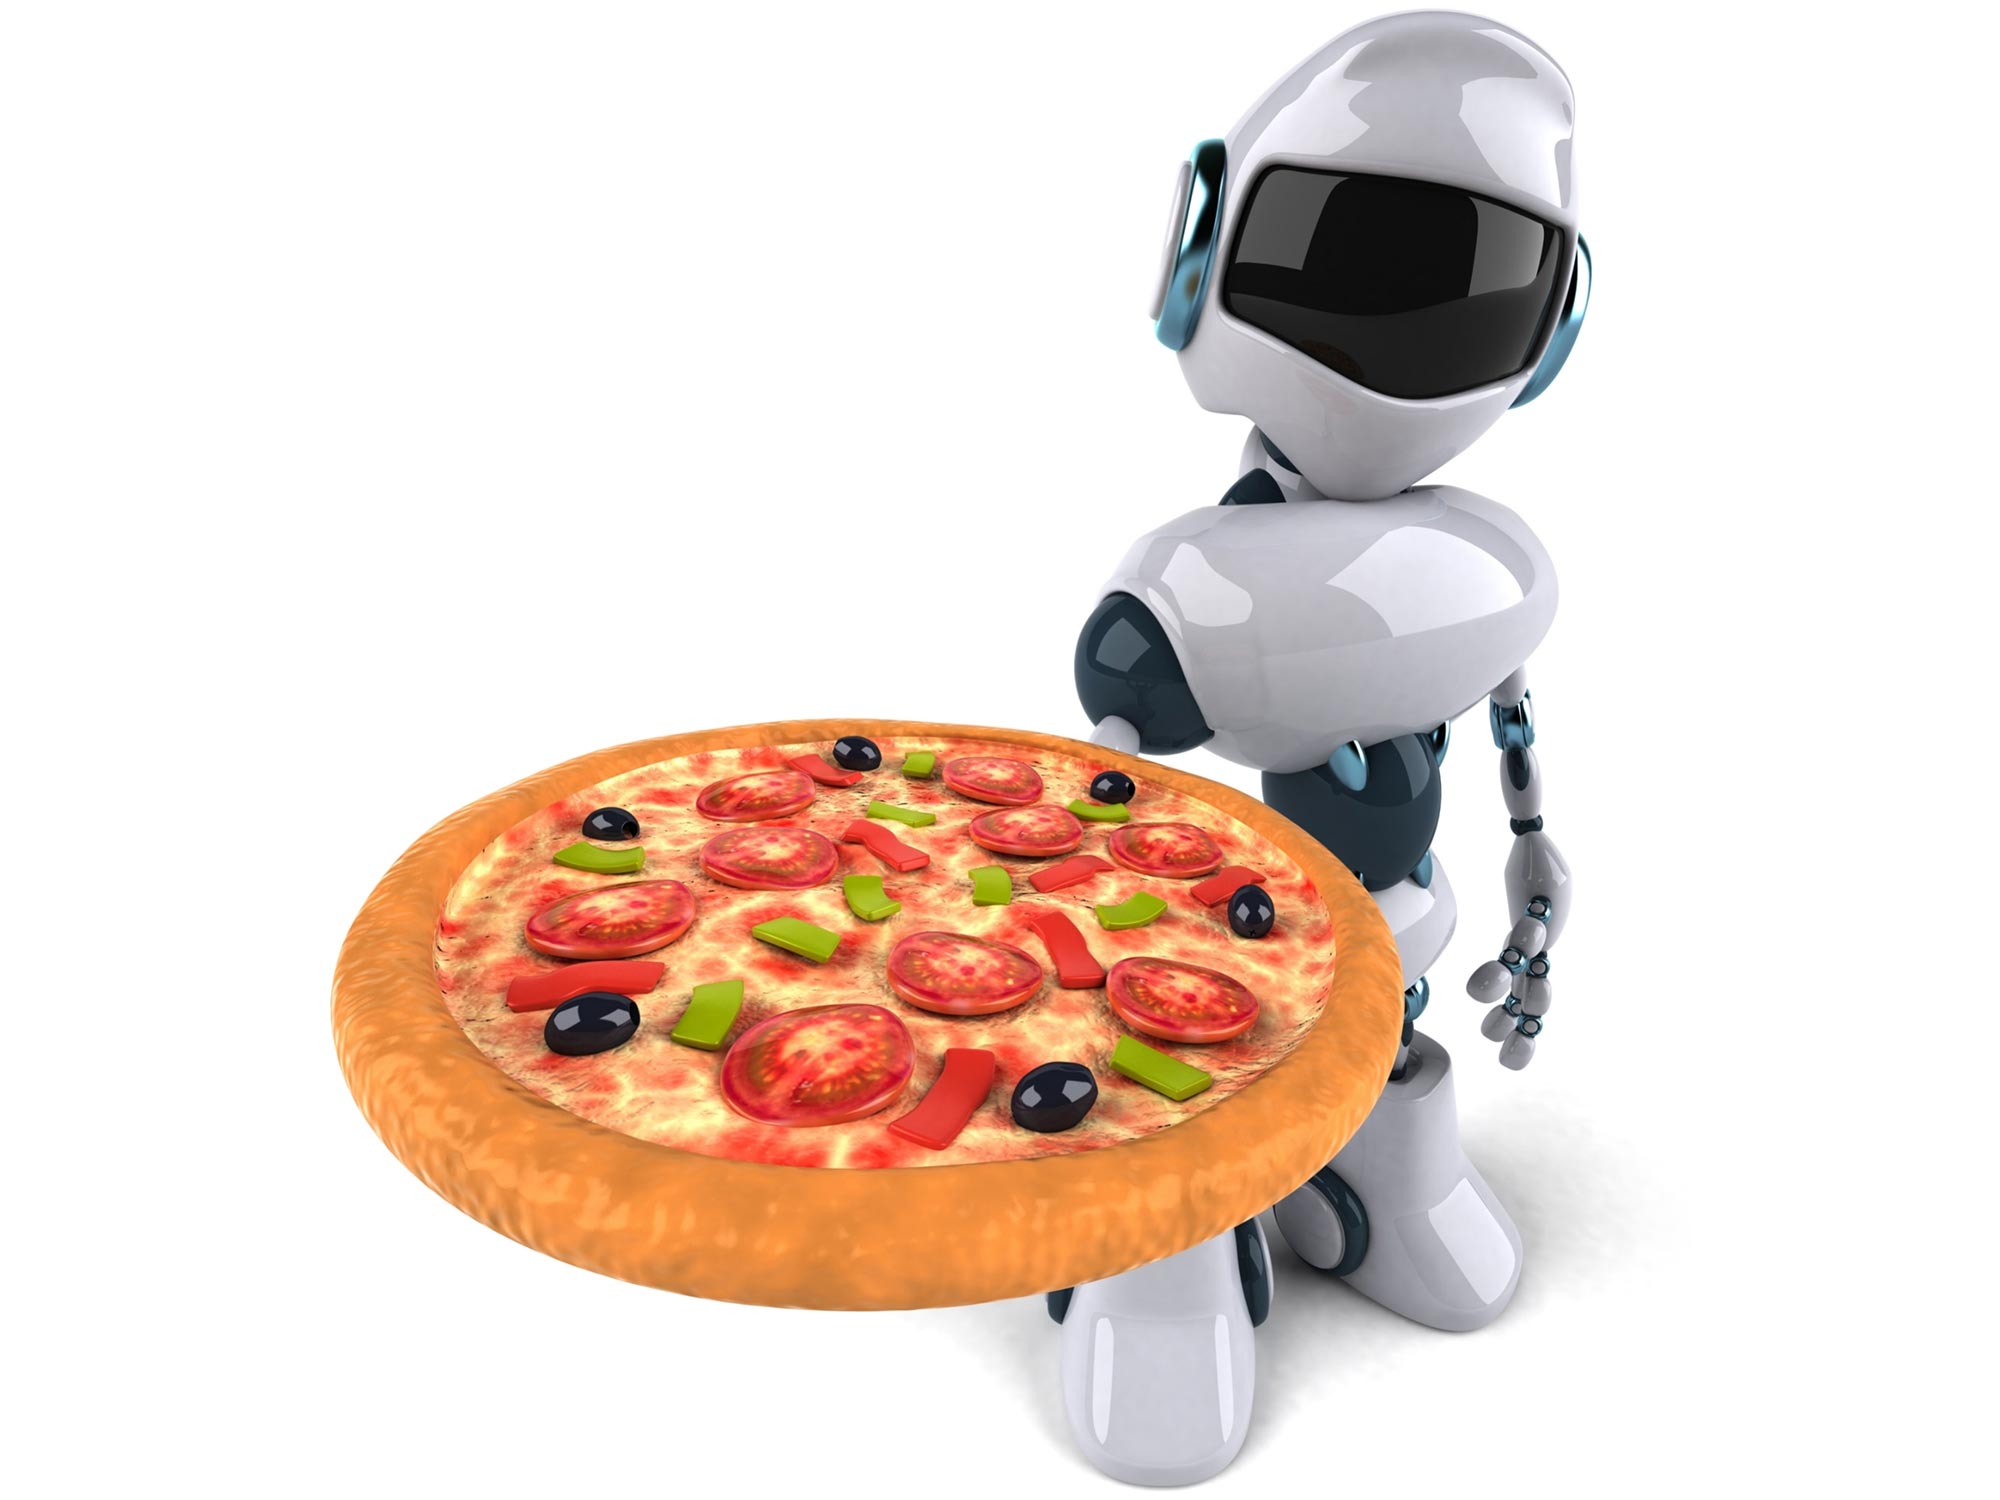 Næsten gentage regulere Solving the Tricky Challenges of Robotic Pizza-Making